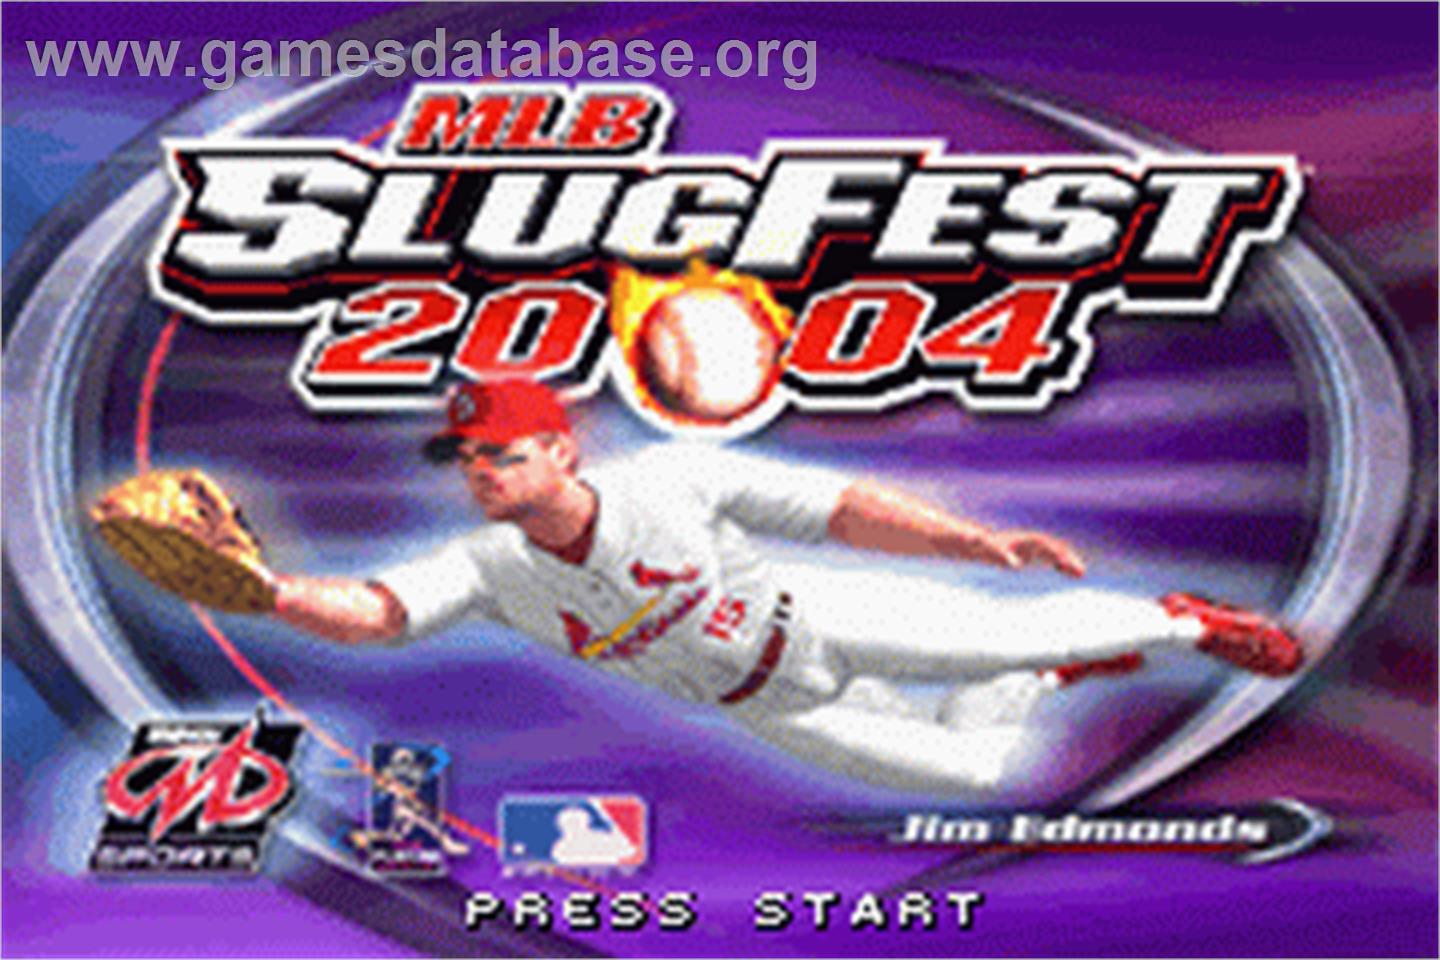 MLB SlugFest 20-04 - Nintendo Game Boy Advance - Artwork - Title Screen